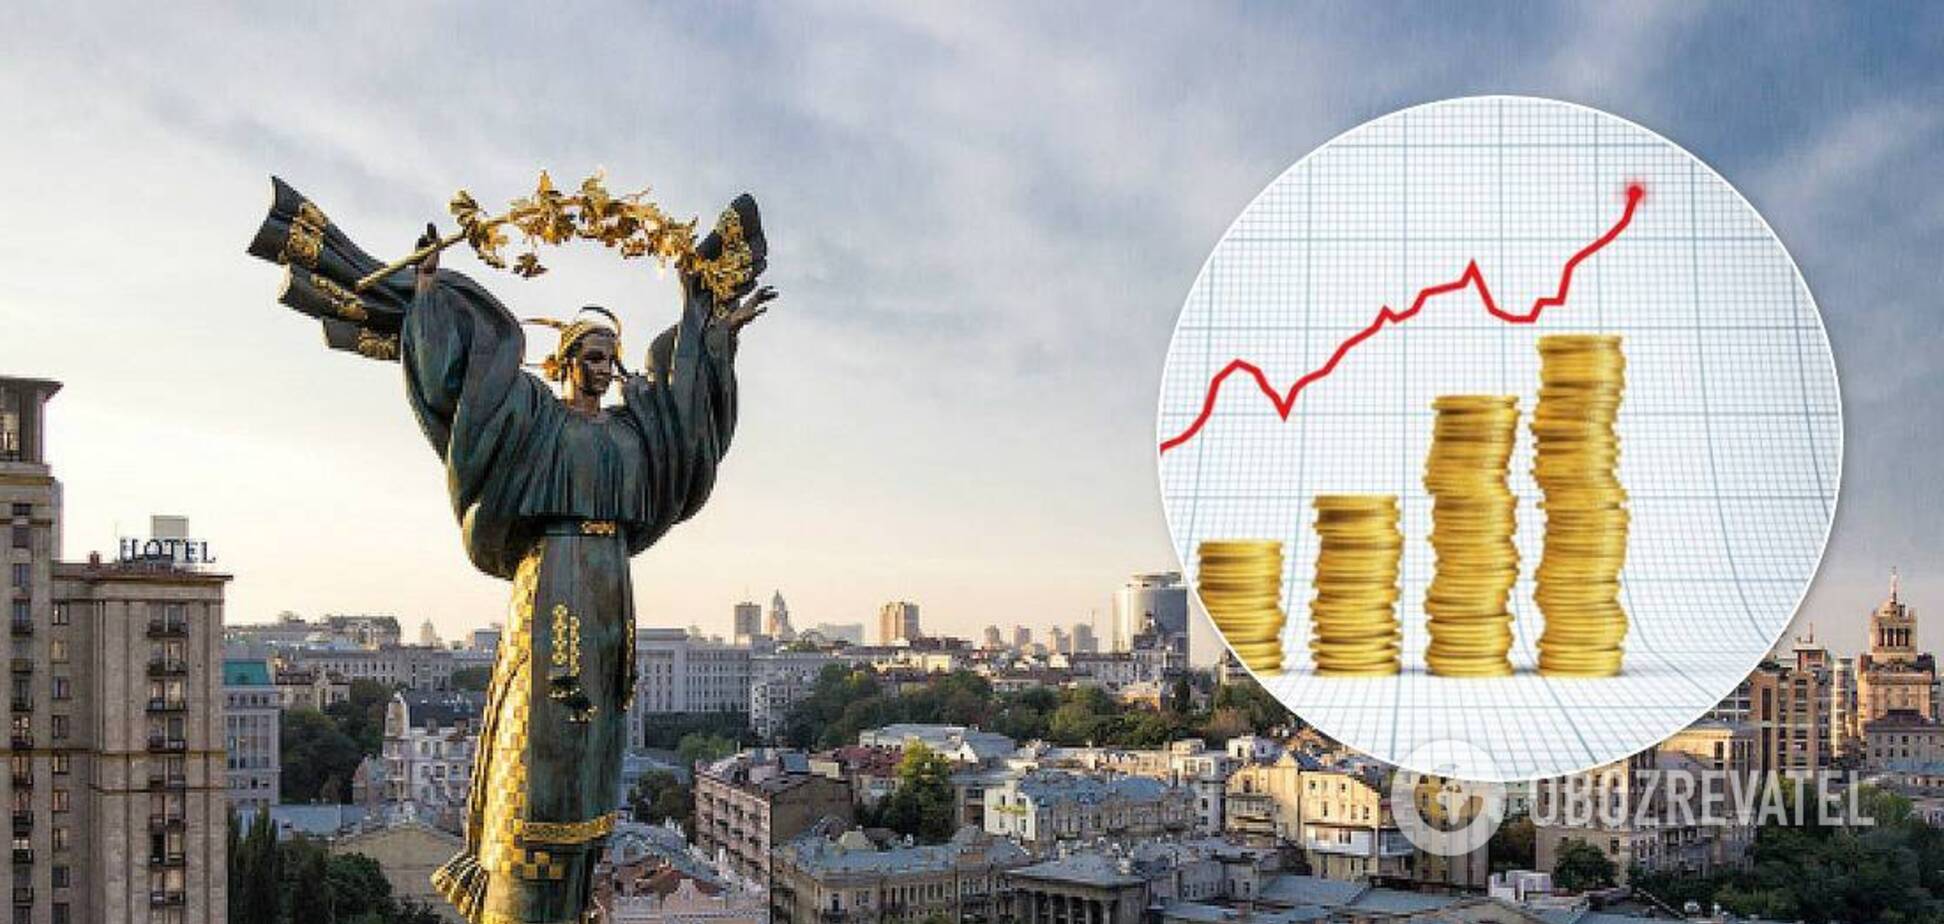 ВВП Украины